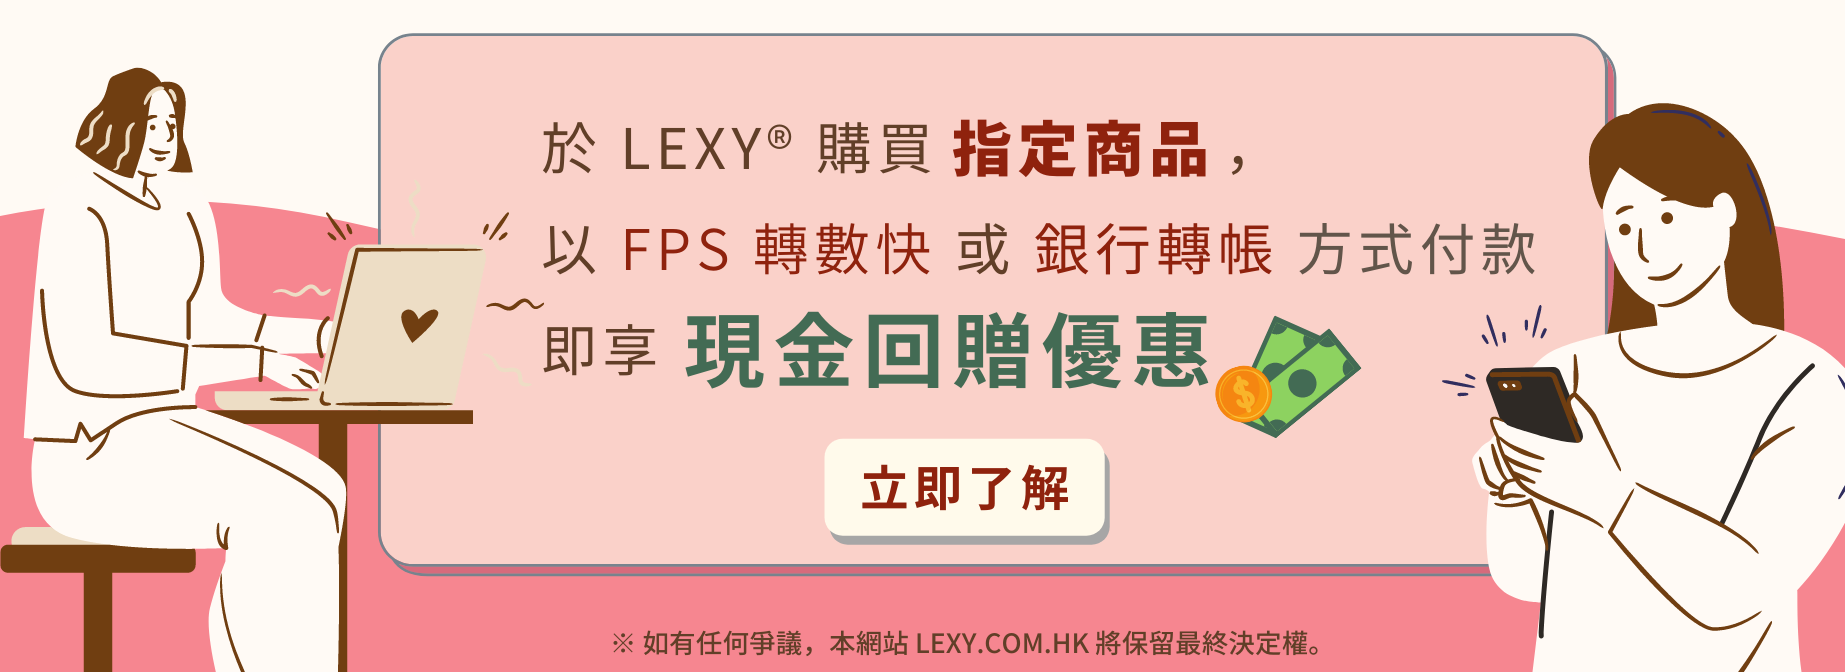 LEXY ® 香港成人用品商店 指定商品現金回贈優惠